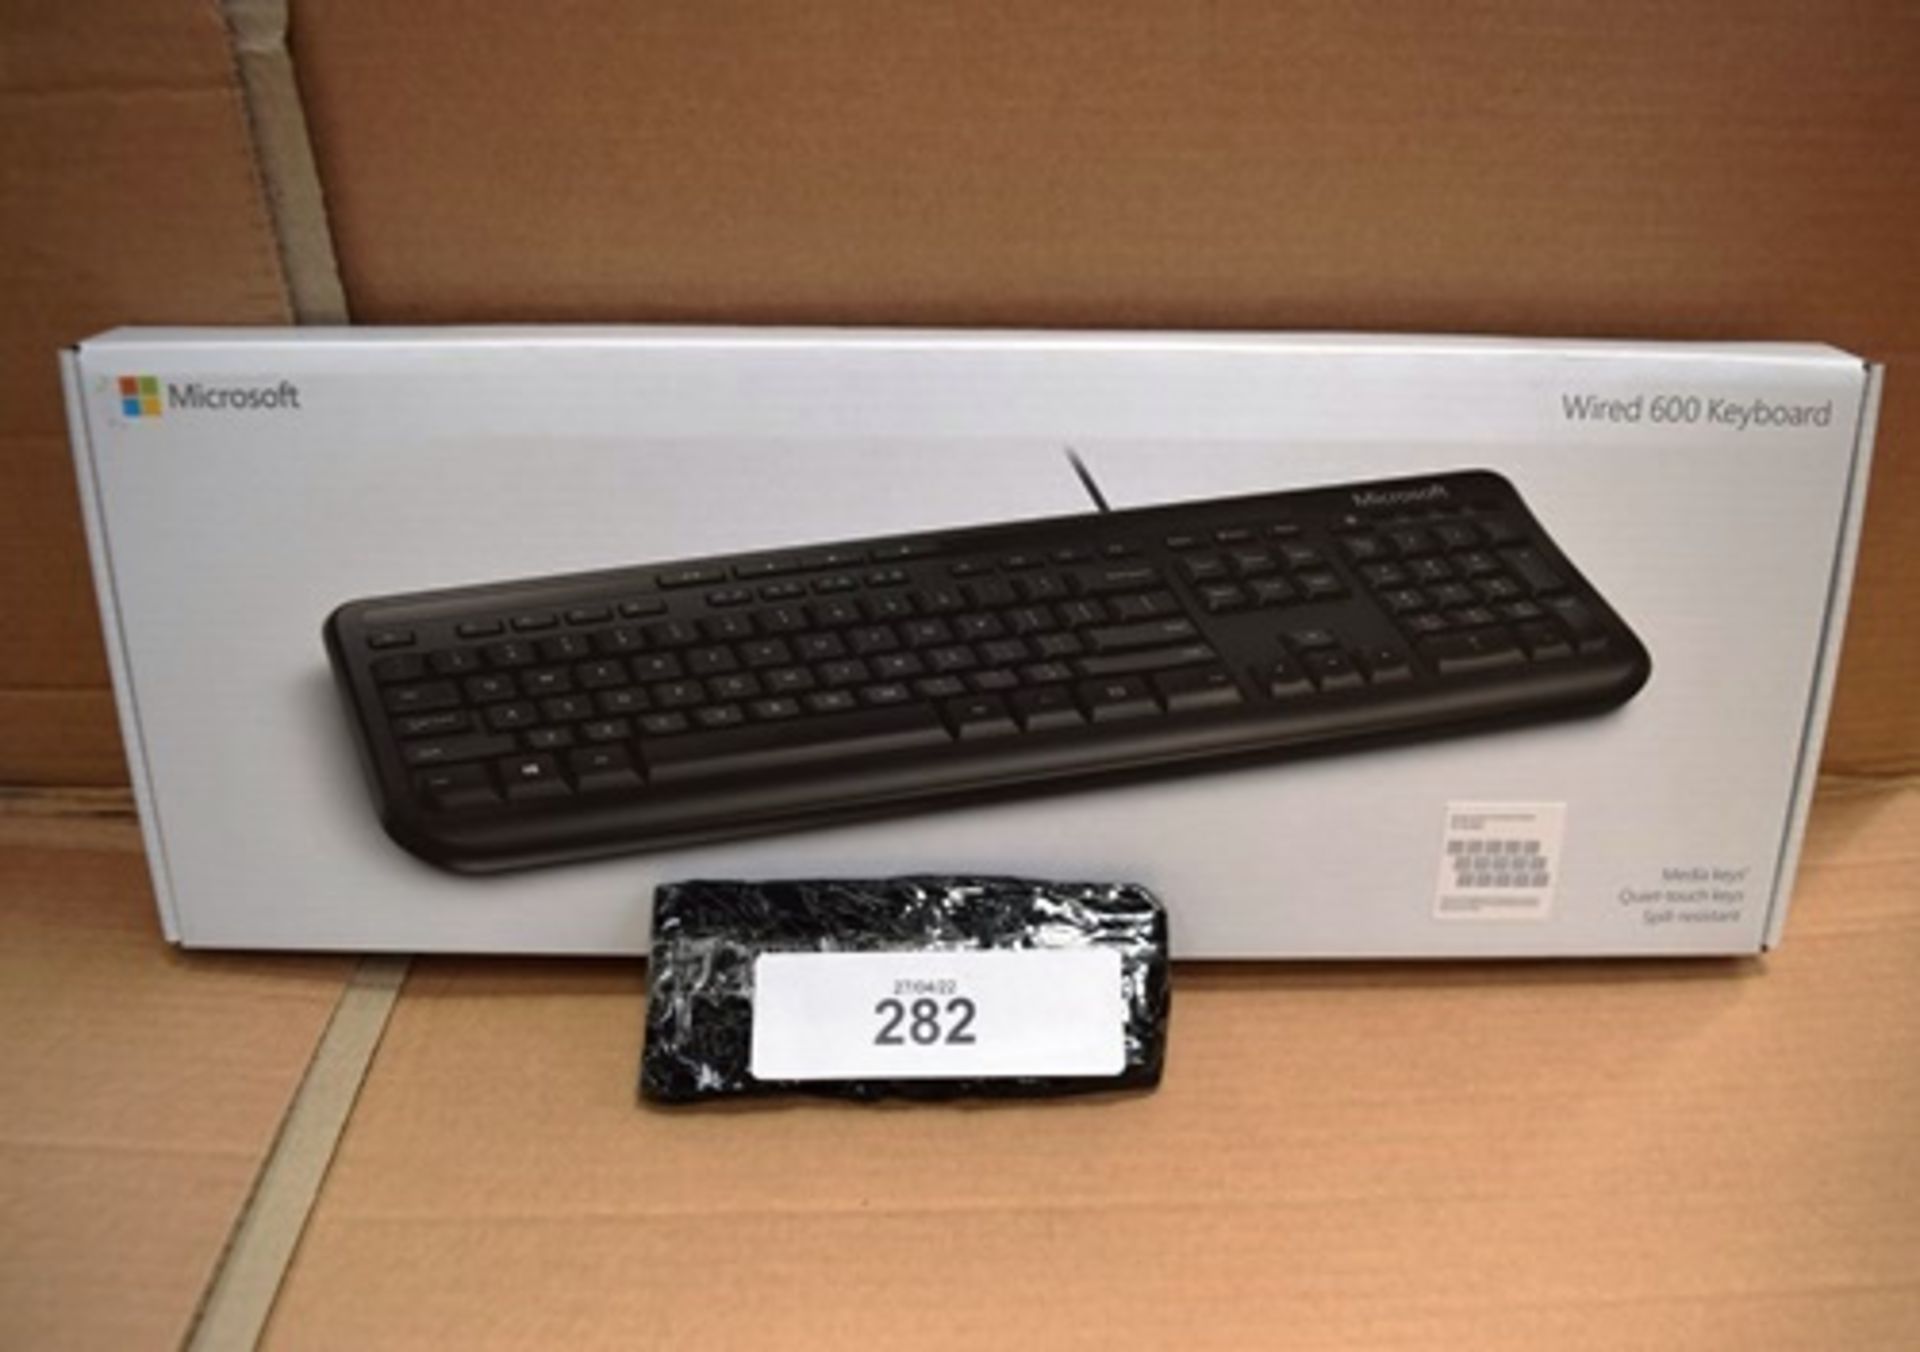 10 x Microsoft wire 600 keyboards, model 1576 - New in box (cab4)